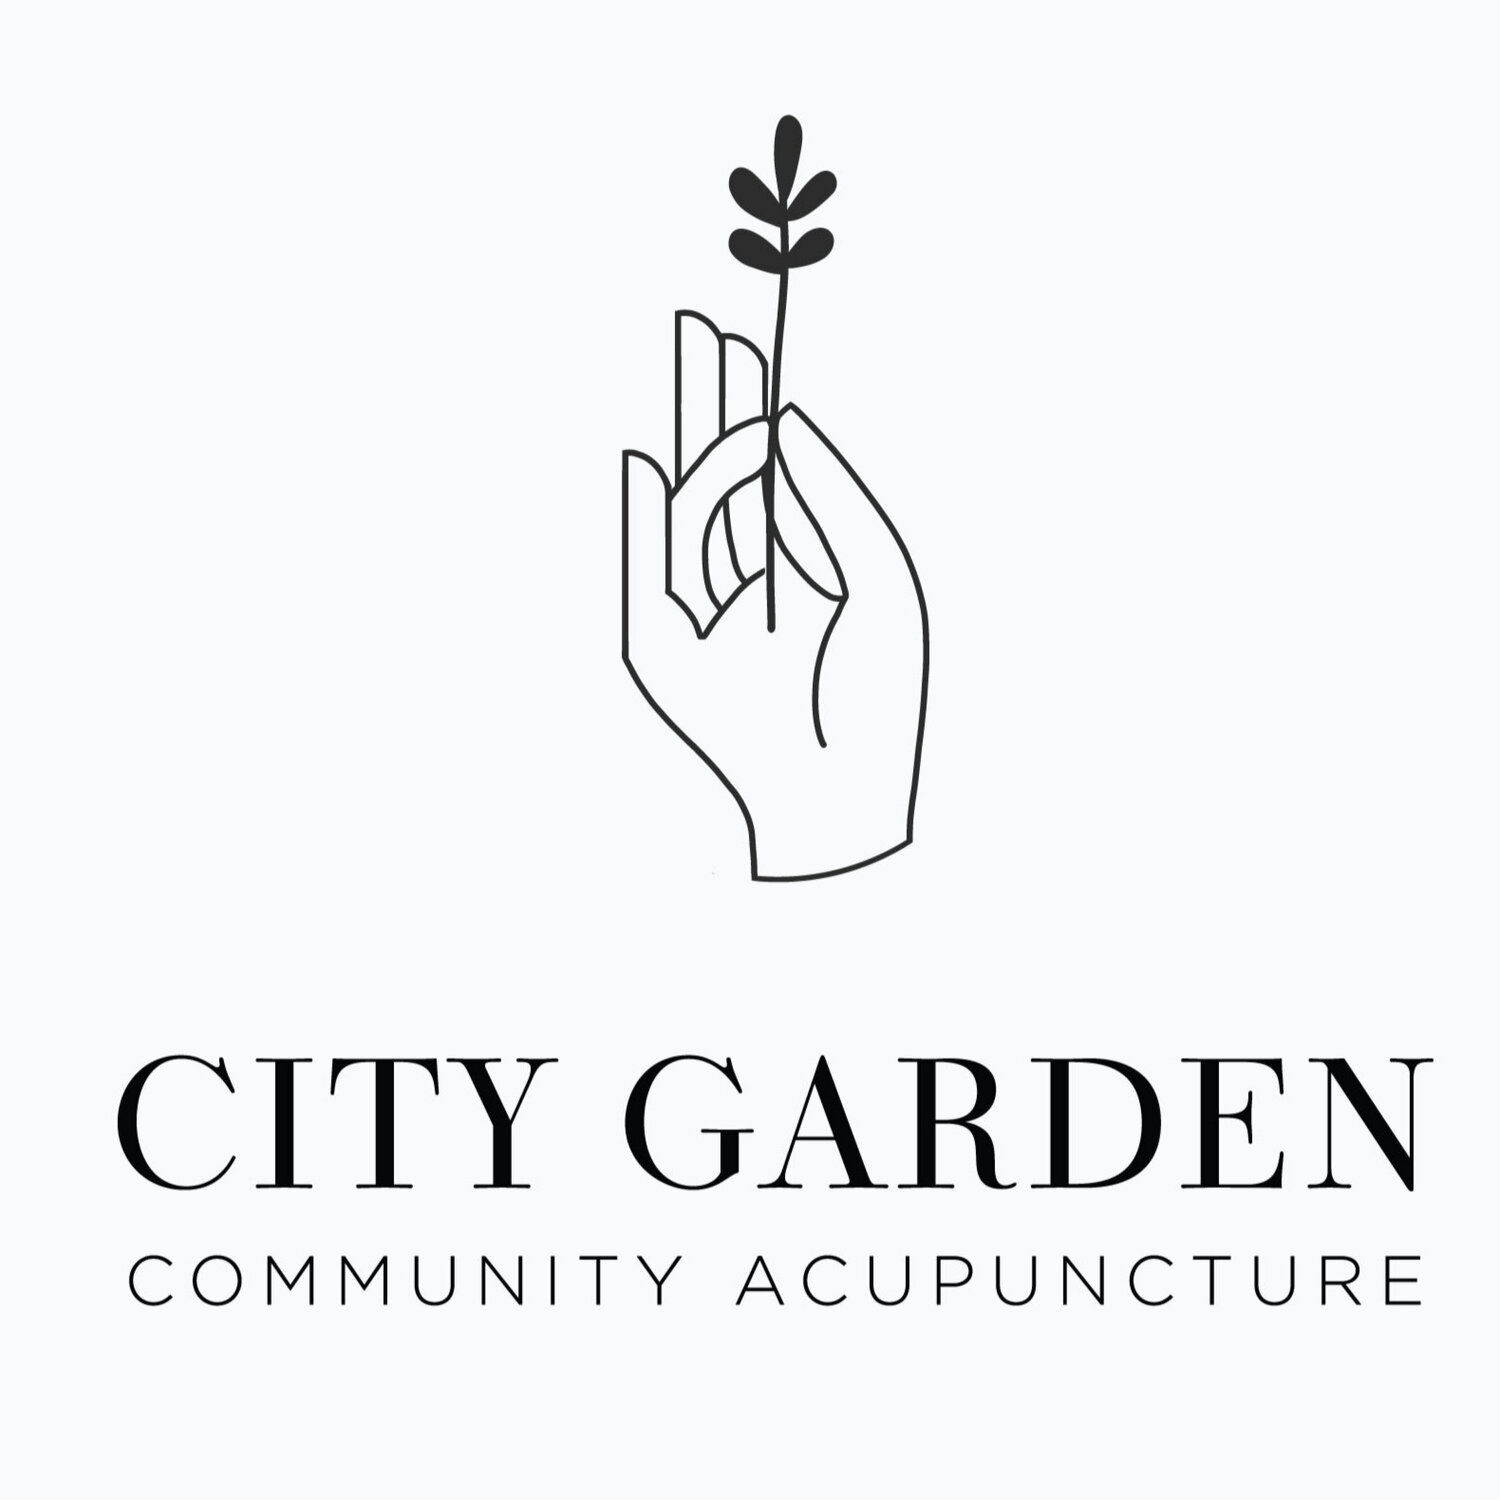 City Garden Community Acupuncture